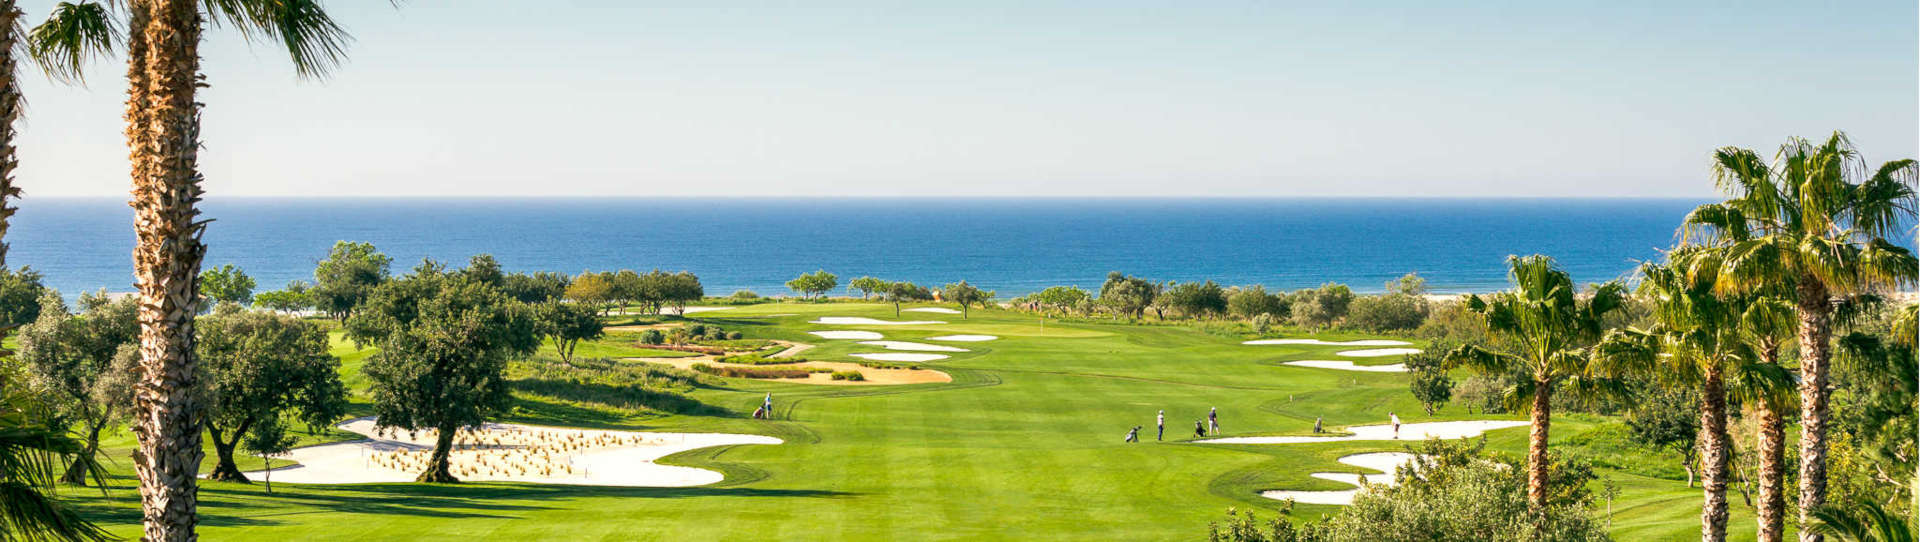 Portugal golf holidays - Premium East Algarve Golf Package - Photo 3